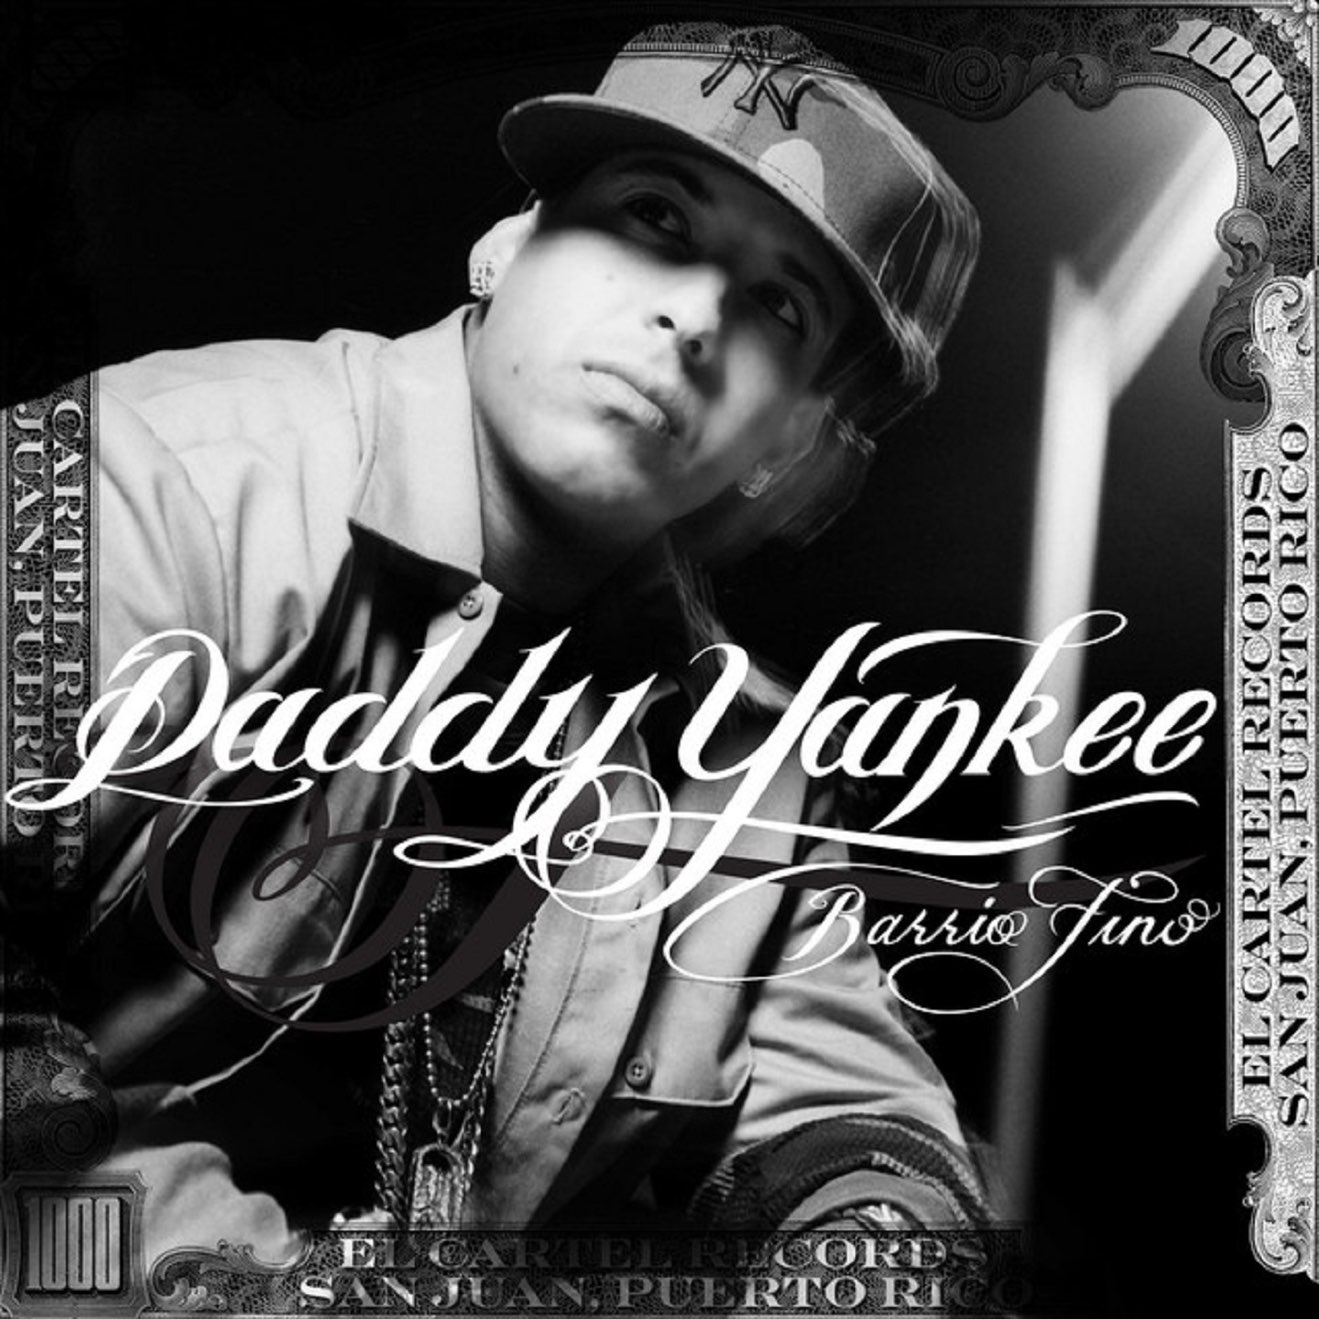 Daddy Yankee – Barrio Fino (Bonus Track Version) (2004) [iTunes Match M4A]